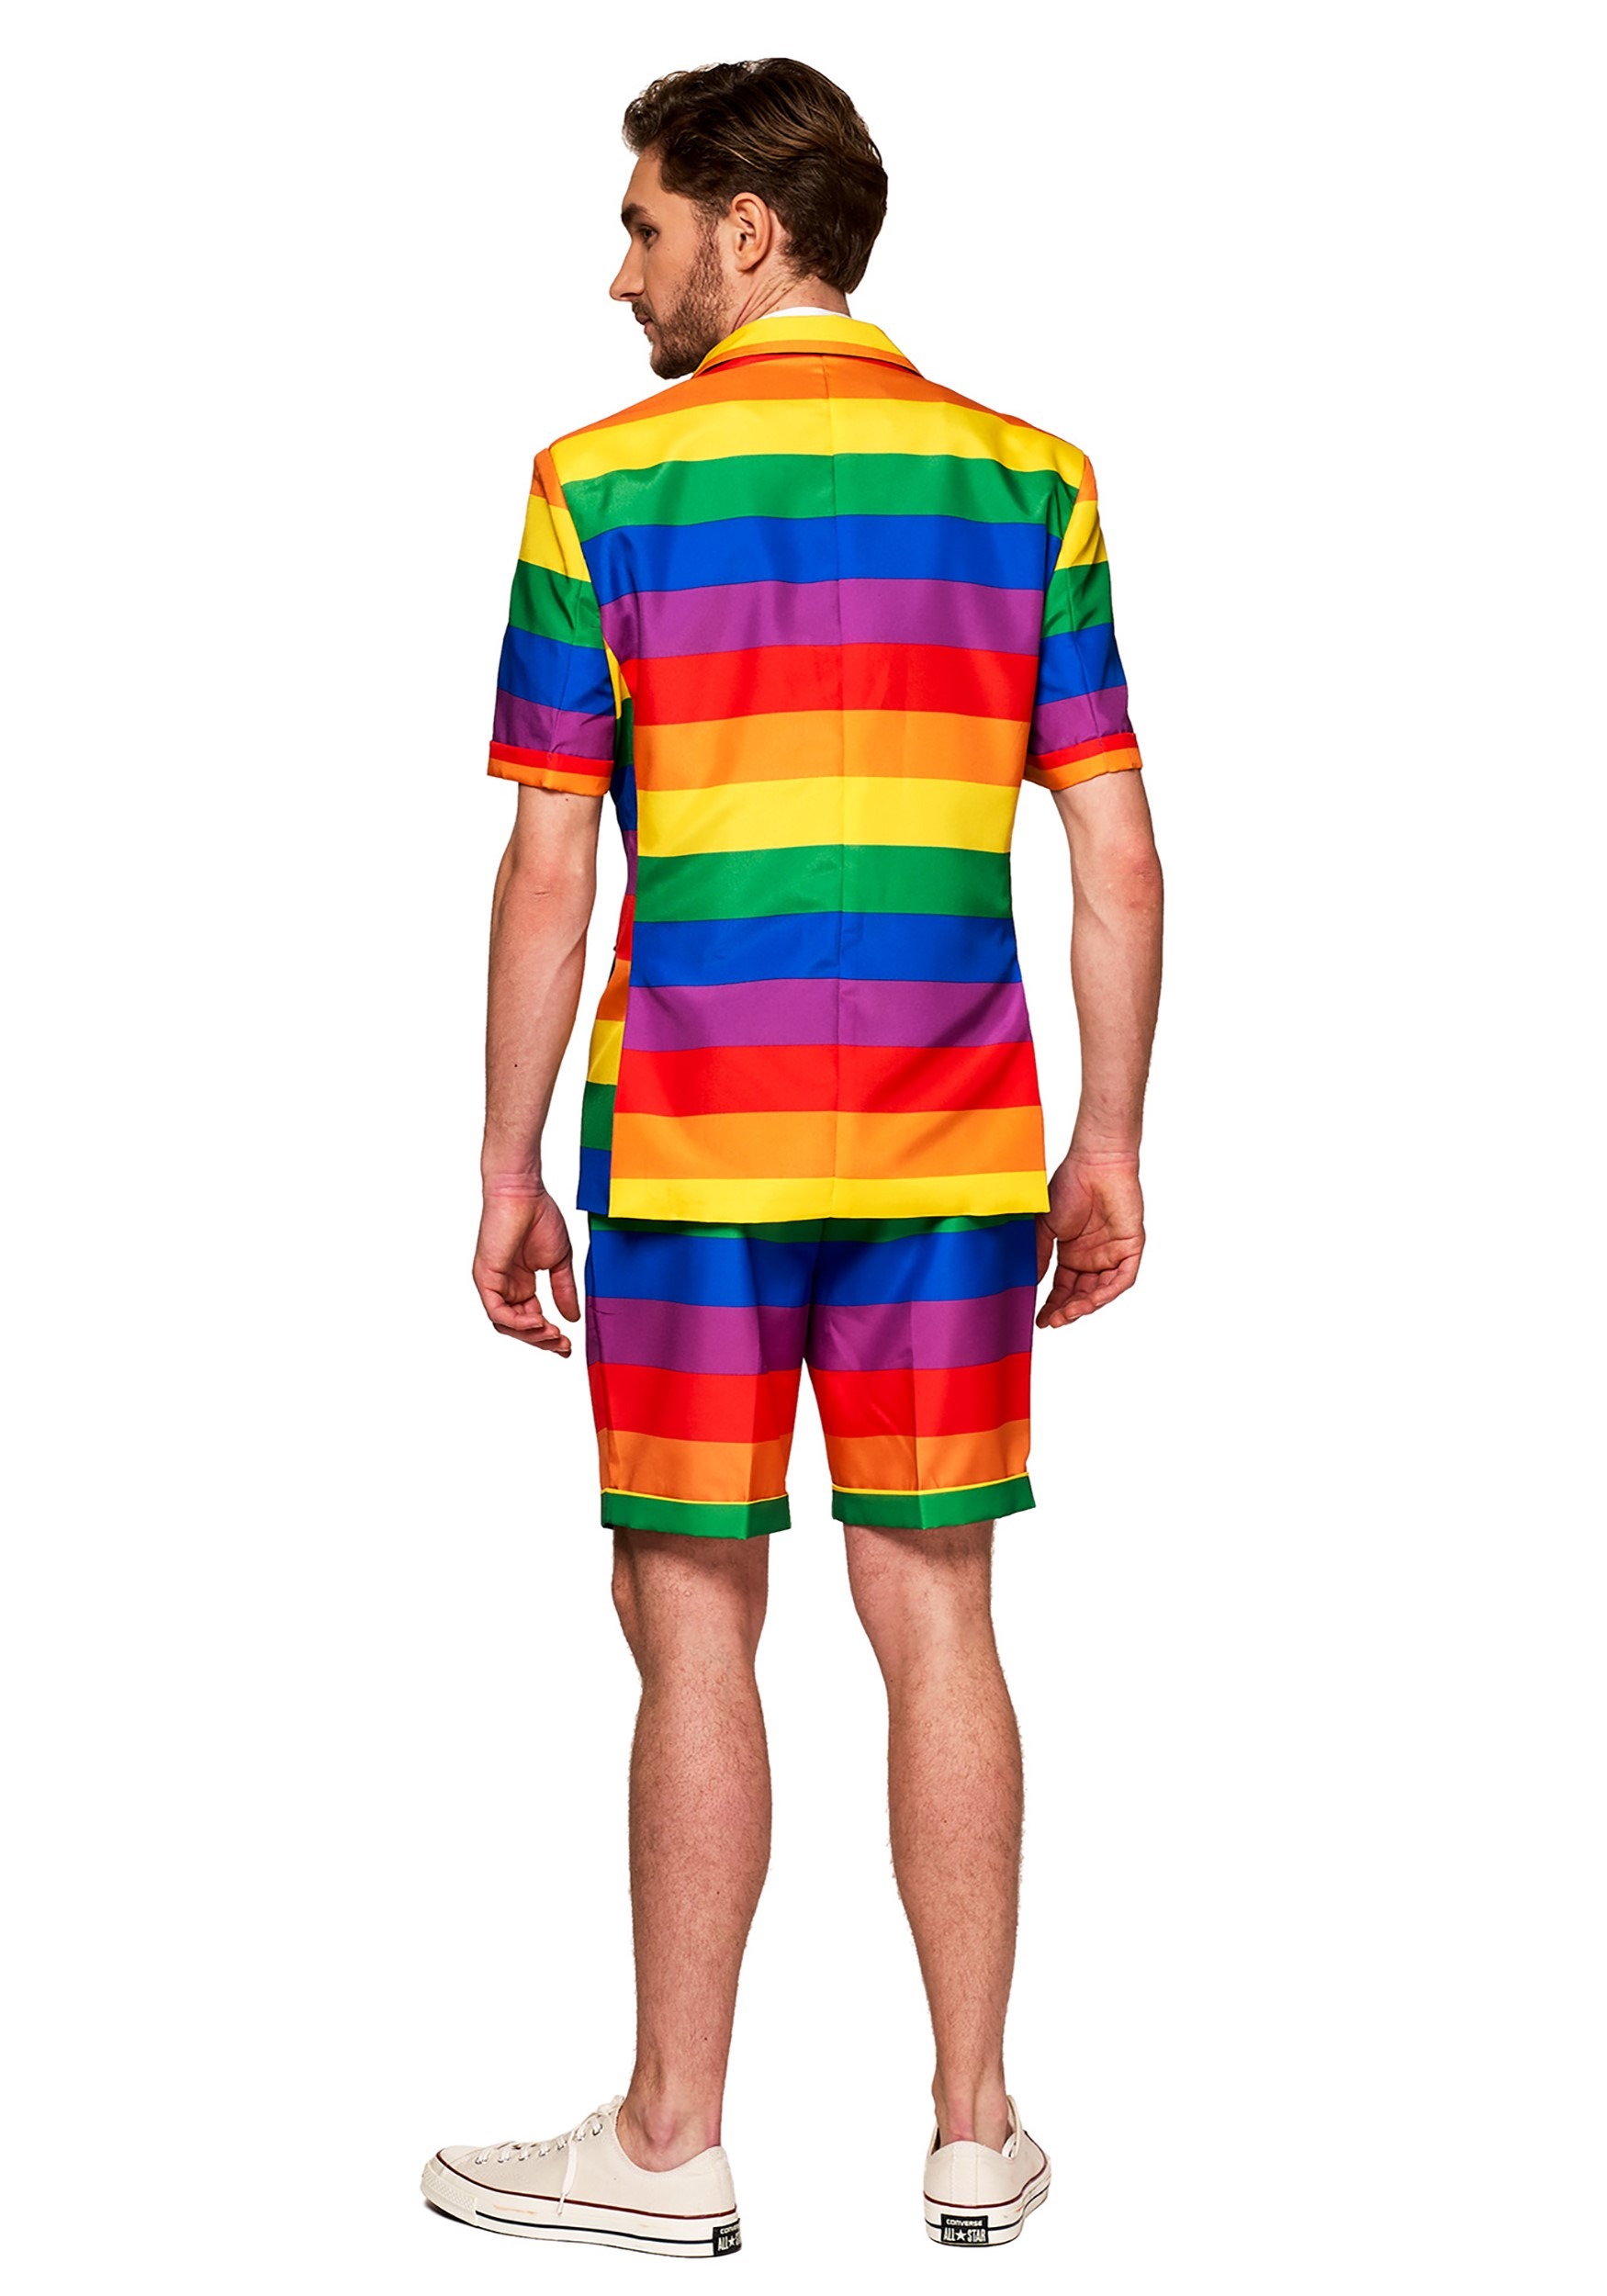 Suitmeister Rainbow Summer Suit For Men